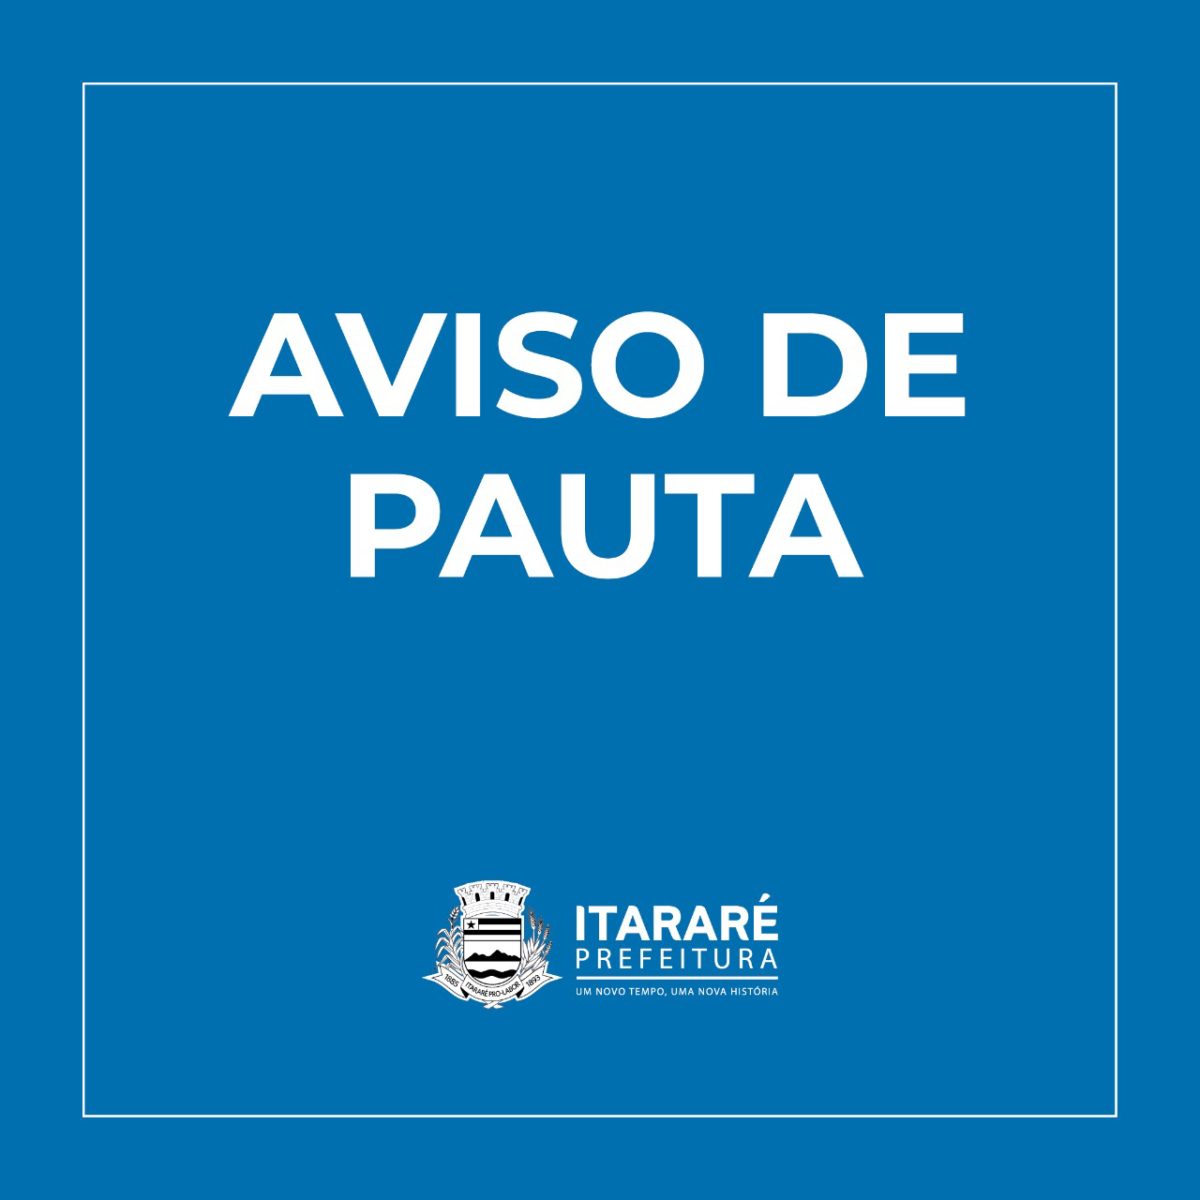 AVISO DE PAUTA: ‘Prefeitura no Bairro’ acontece no Cerrado nesta sexta-feira (17)